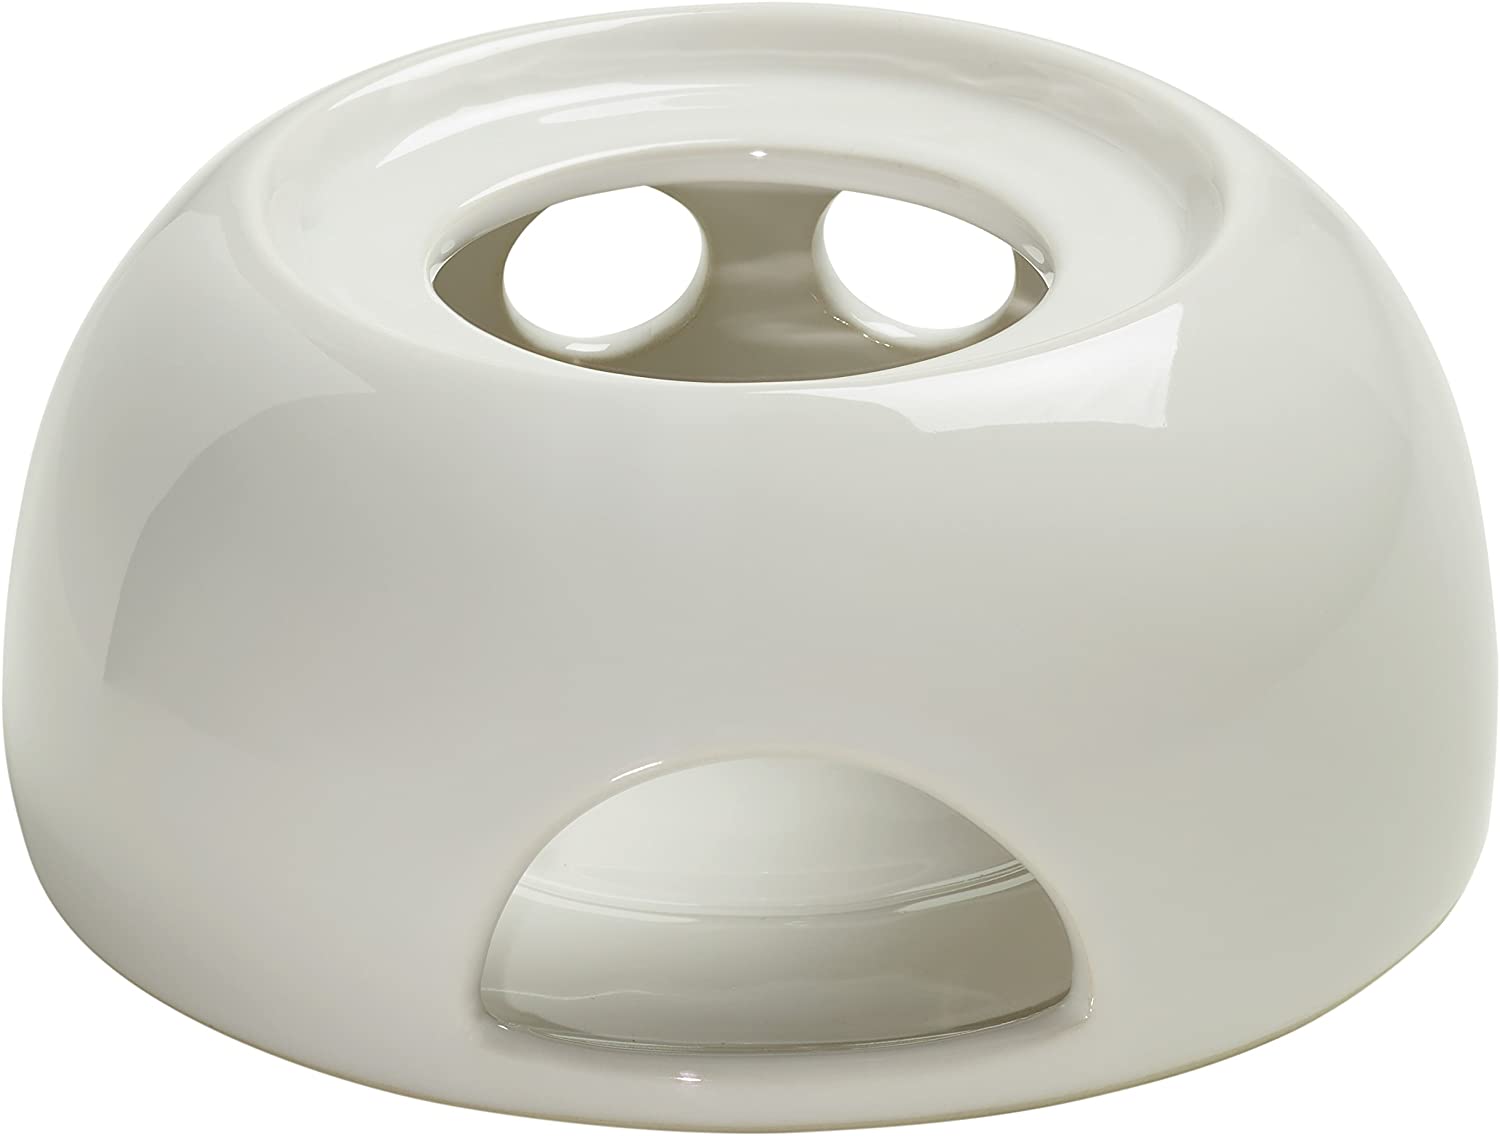 Maxwell Williams InfusionsT Ceramic Teapot Warmer, 14 cm, White